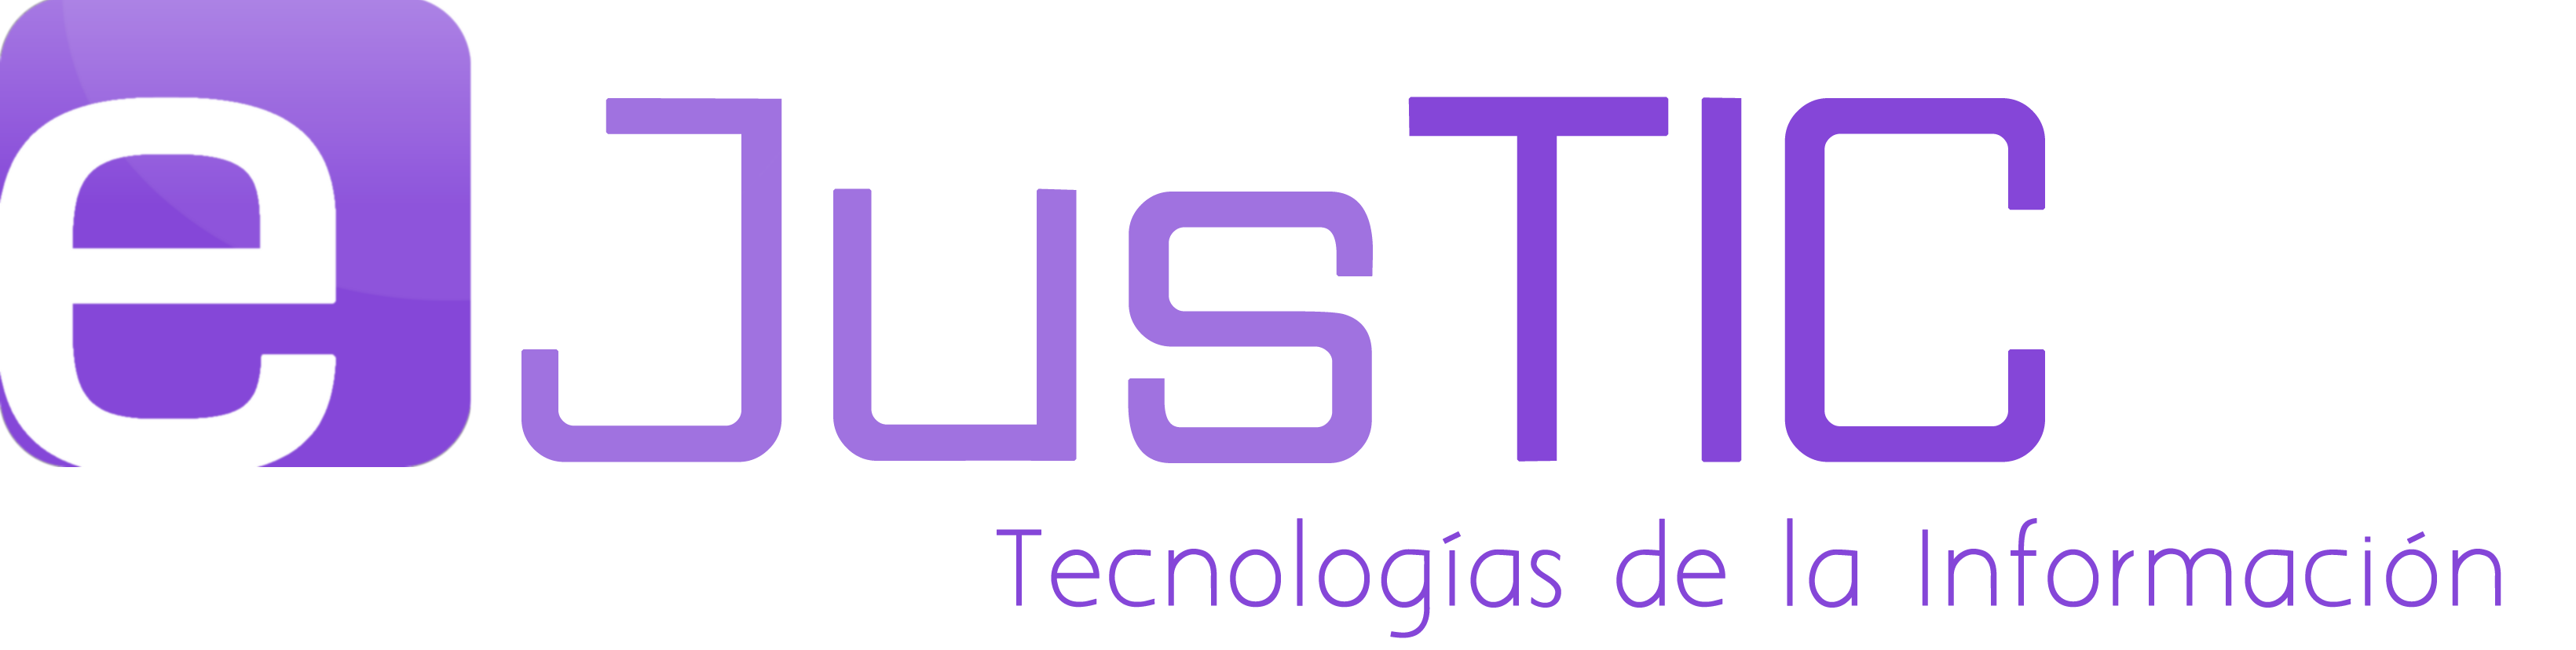 eJustIC logo v5 cropped slogan PNGPLANO